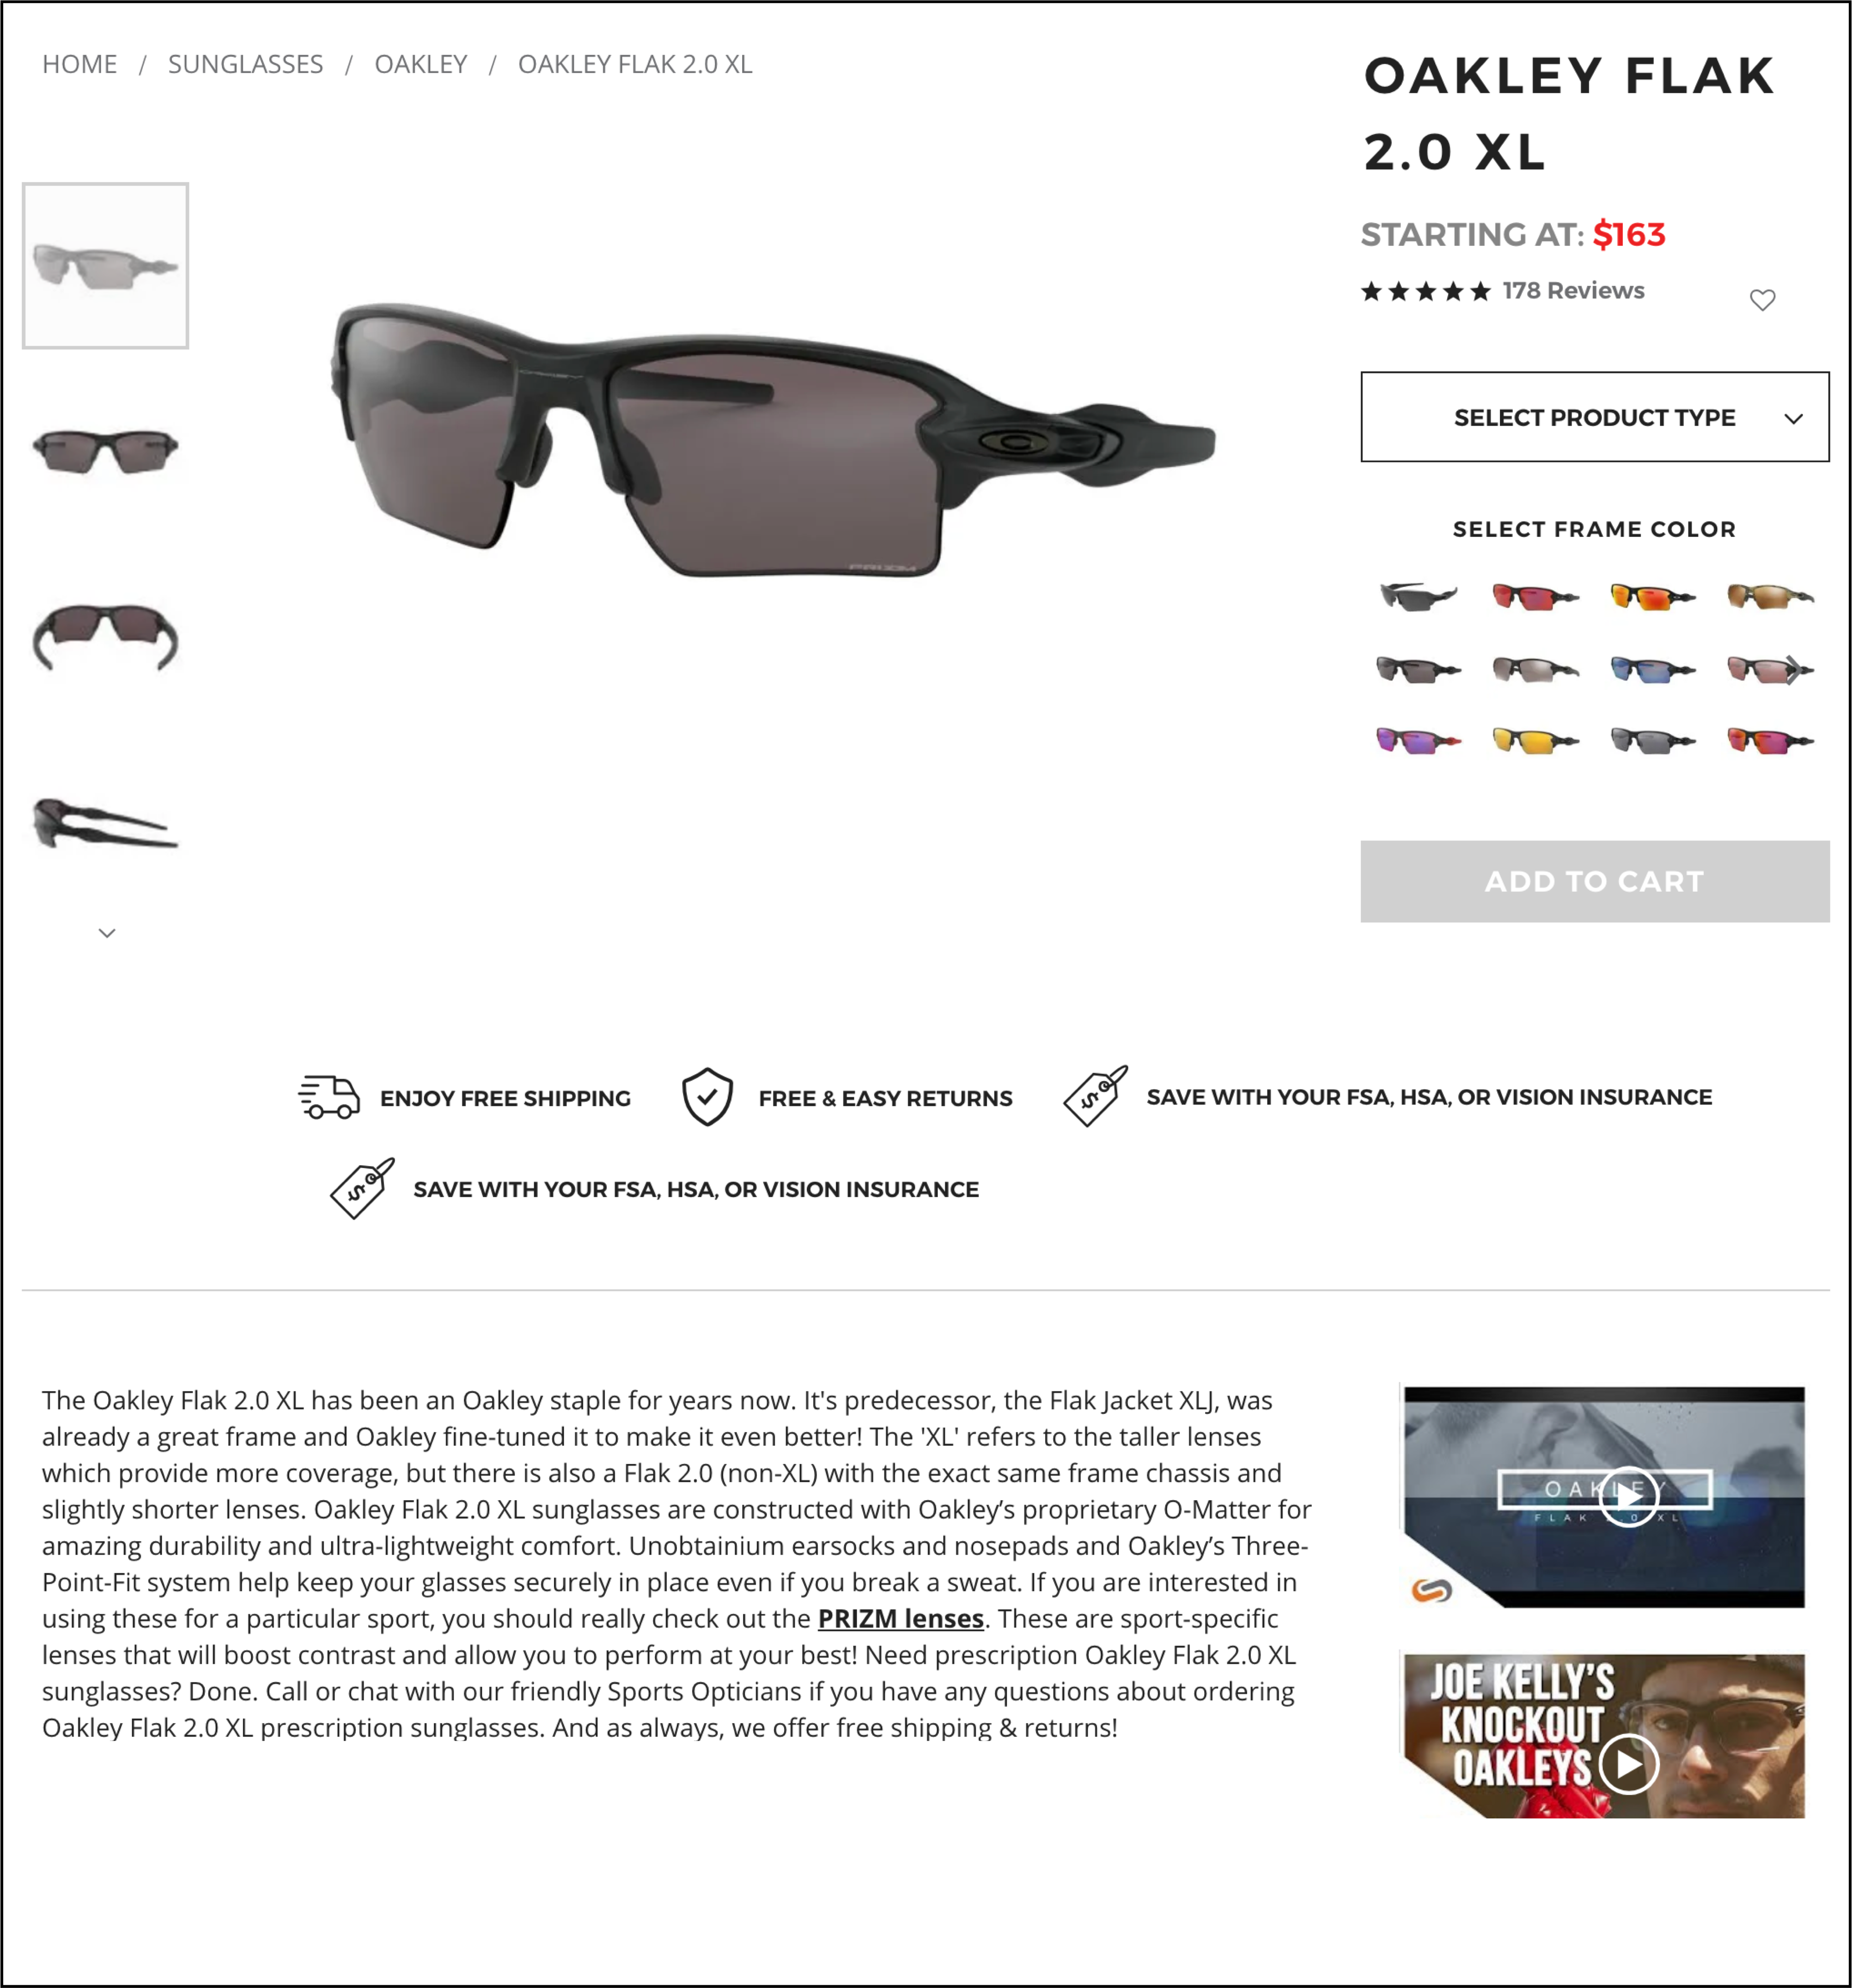 The current SportRx.com Oakley Flak 2.0 XL product page